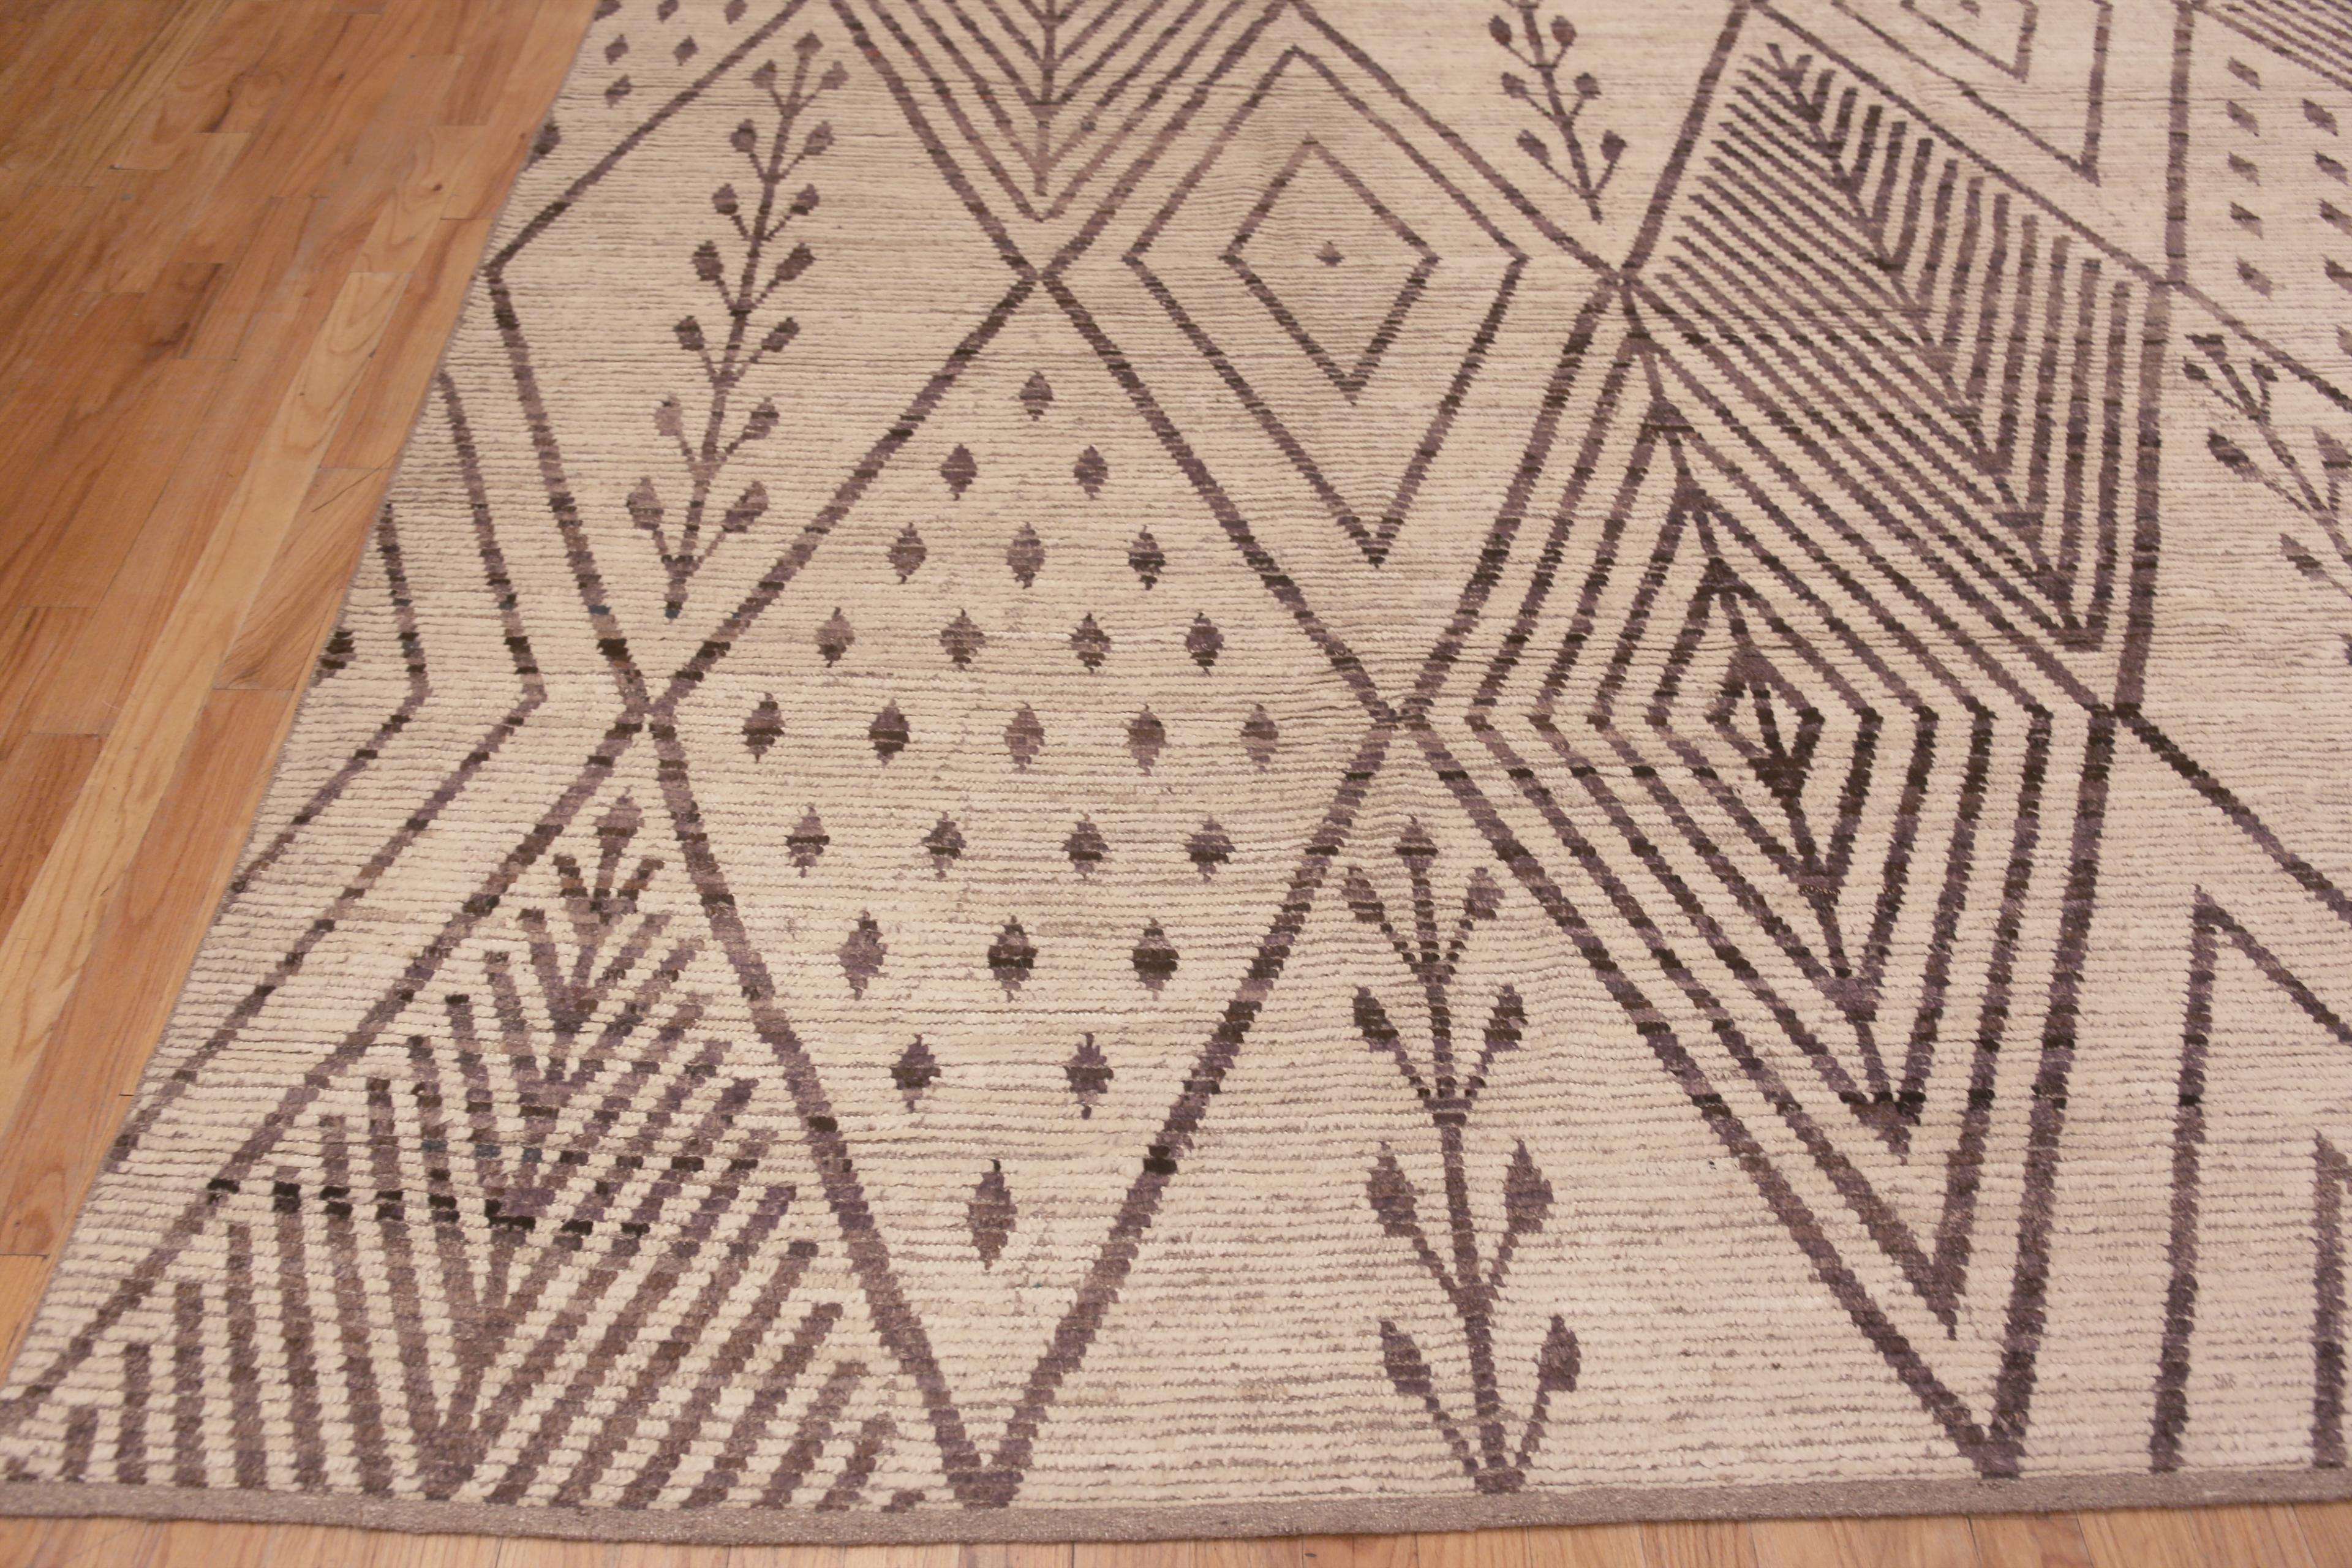 Wool Nazmiyal Collection Tribal Geometric Beni Ourain Design Modern Rug 12' x 15'3